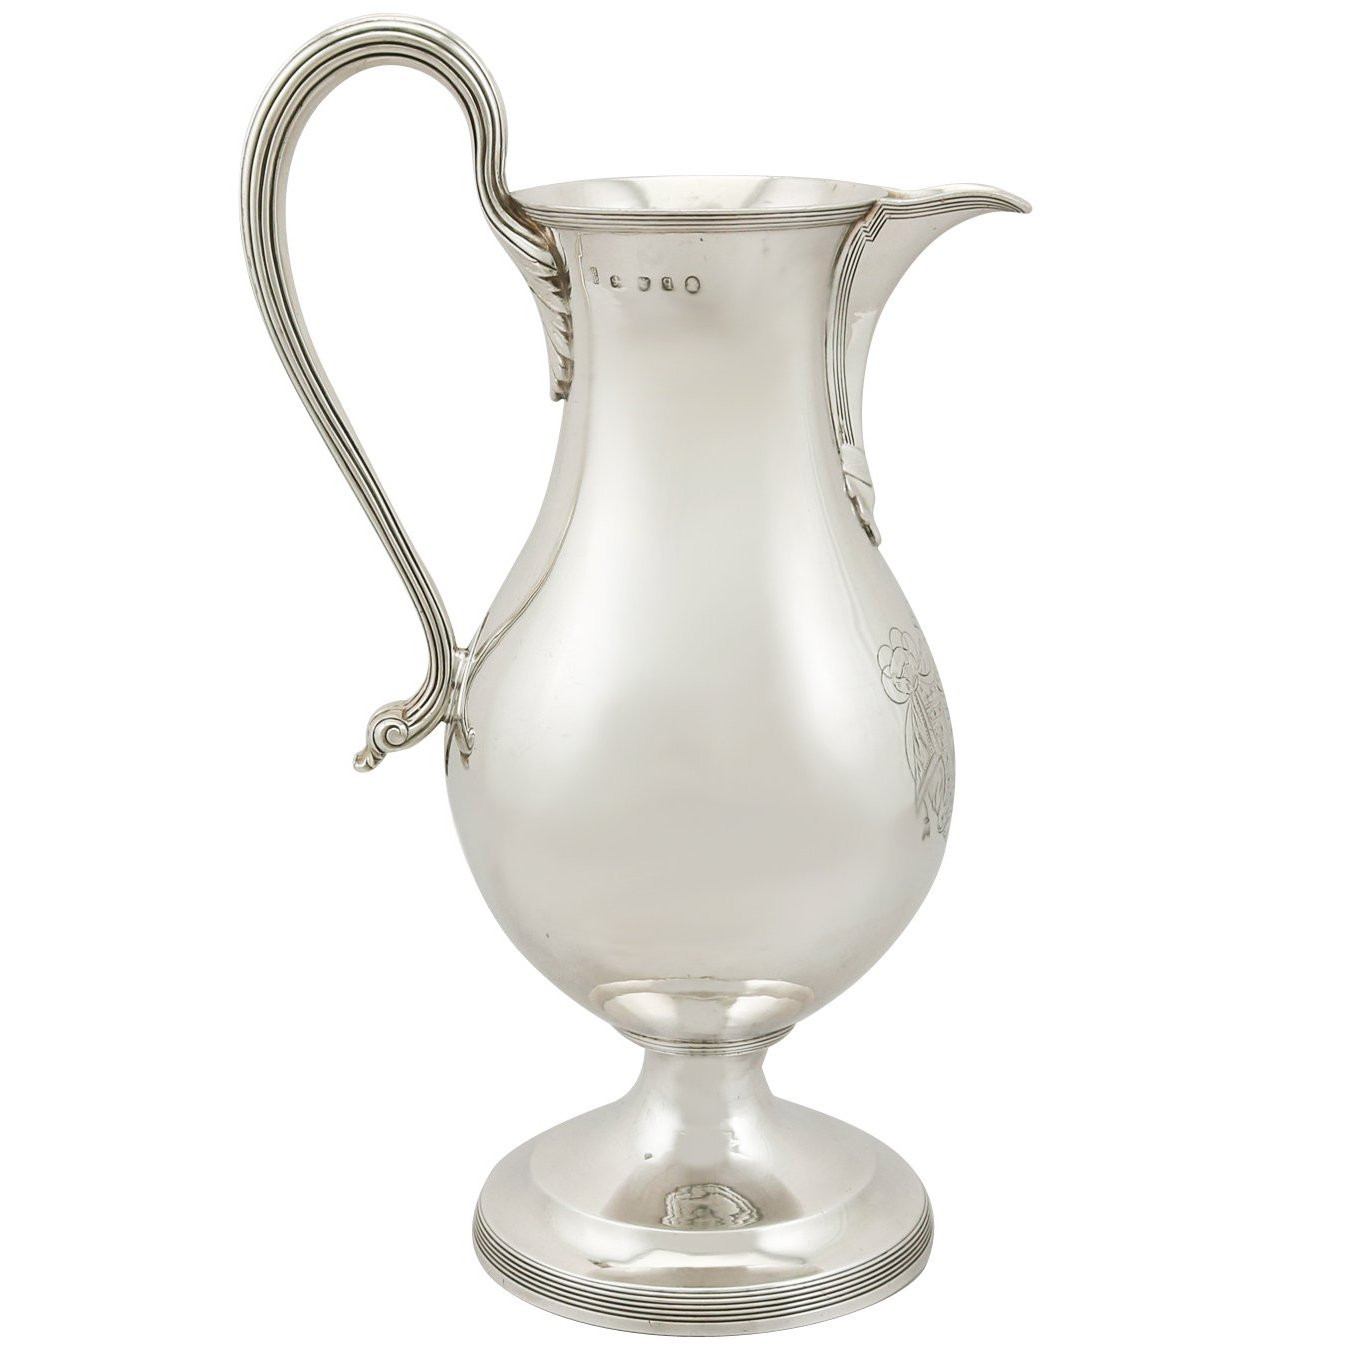 19 Stylish Metal Pitcher Flower Vase 2024 free download metal pitcher flower vase of georgian sterling silver beer jug for sale at 1stdibs for a8061a silver beer jug org org